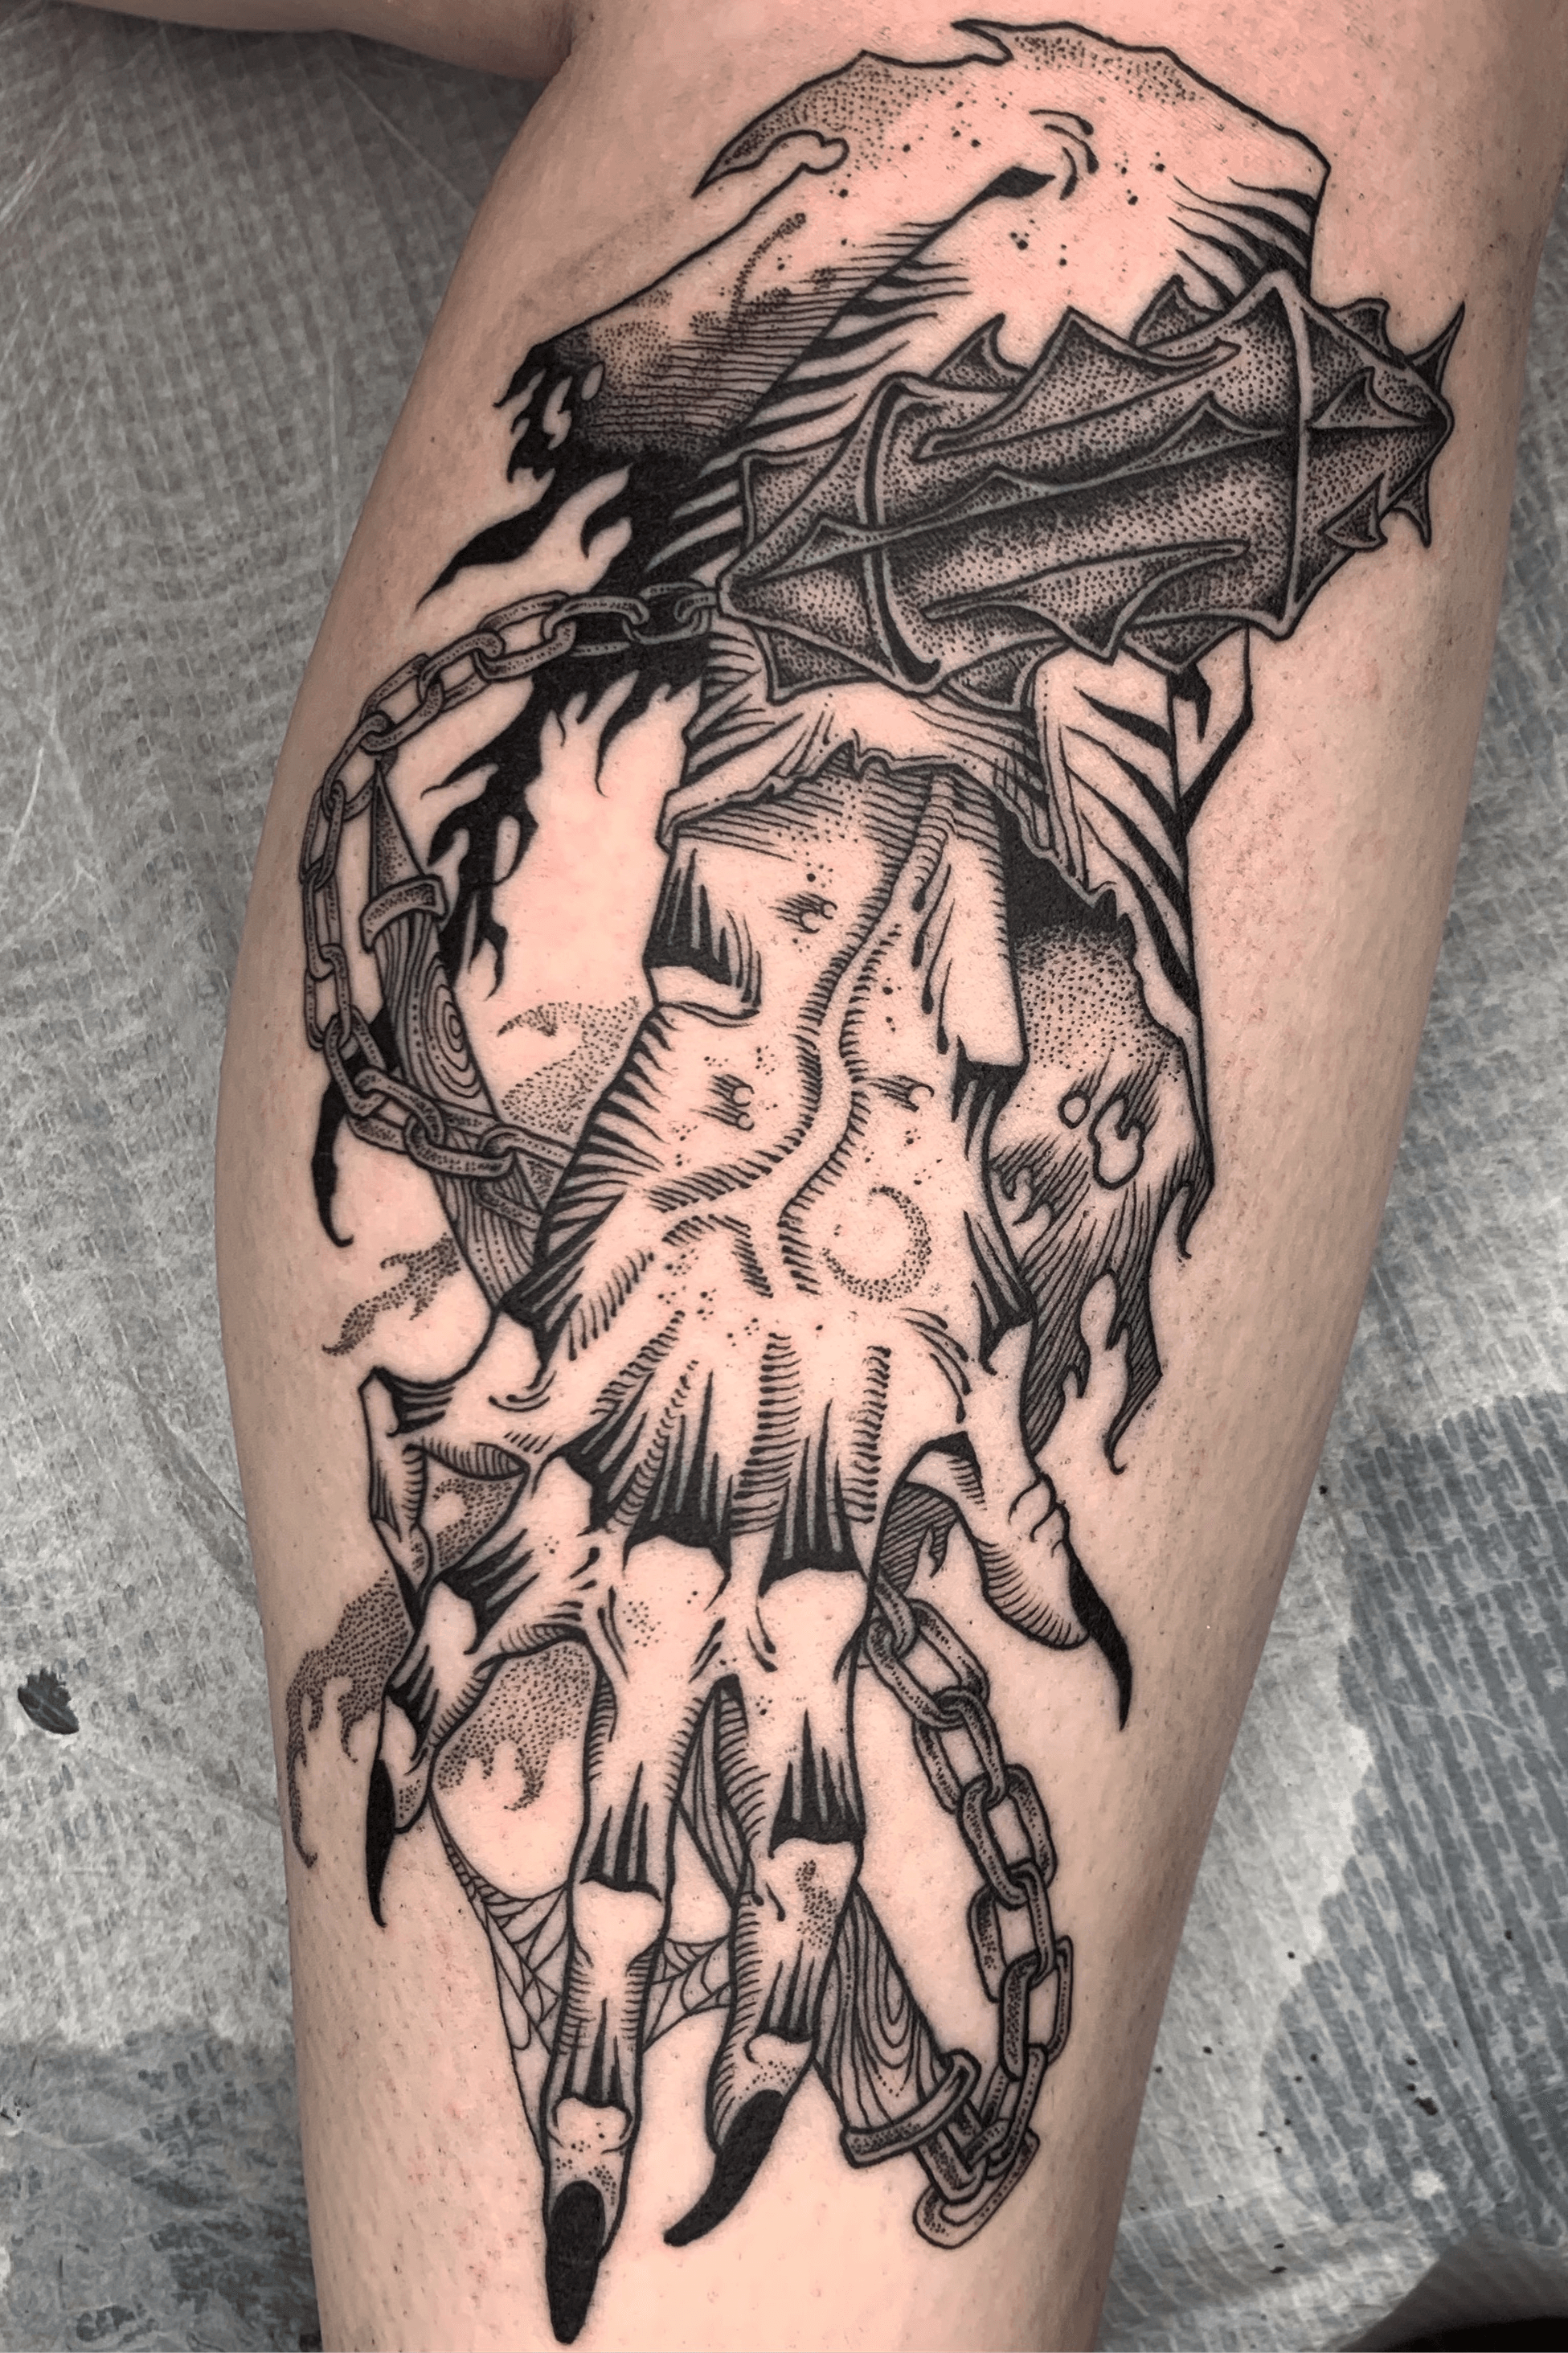 Tattoo uploaded by Angels  Iron  Creepy witch hand by Zahrar  Tattoodo